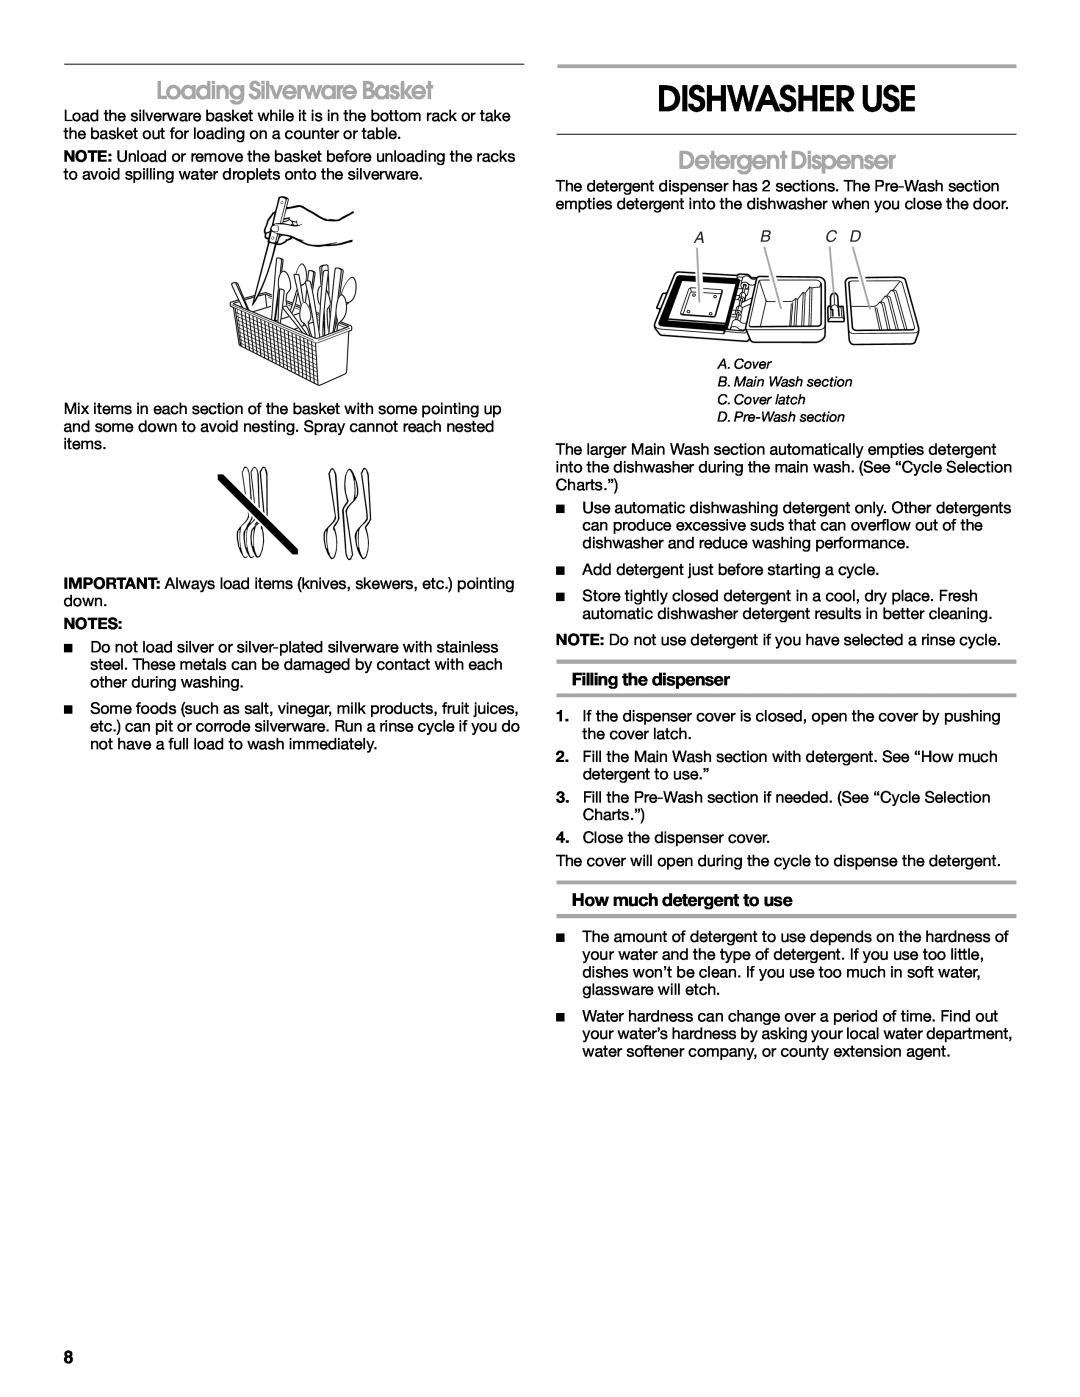 Crosley CUD4000T manual Dishwasher Use, Loading Silverware Basket, Detergent Dispenser, Filling the dispenser, A B C D 